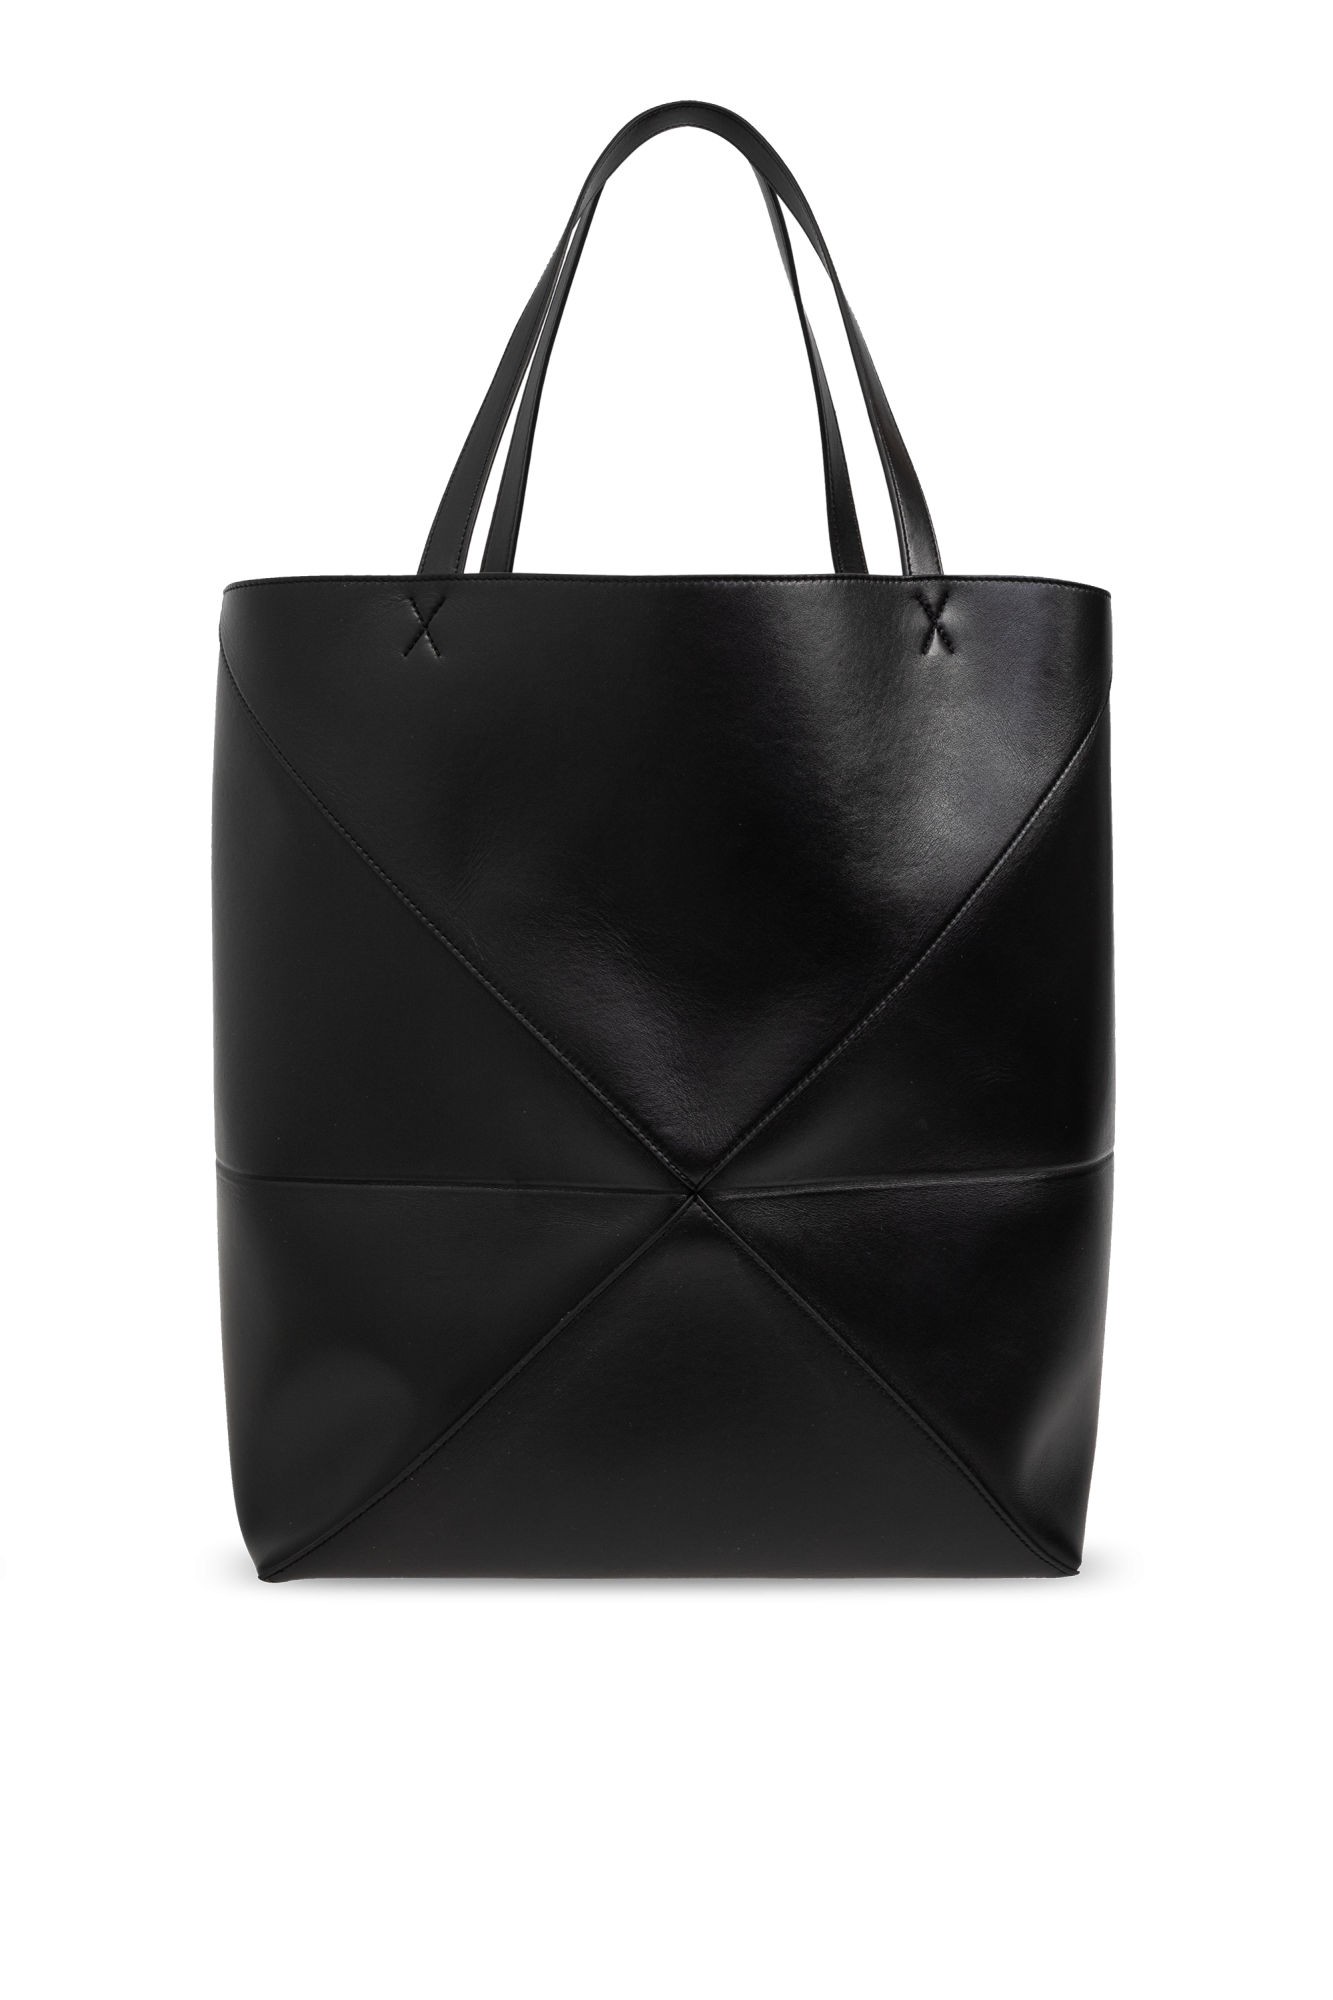 Loewe ‘Fold XL’ Shopper Bag